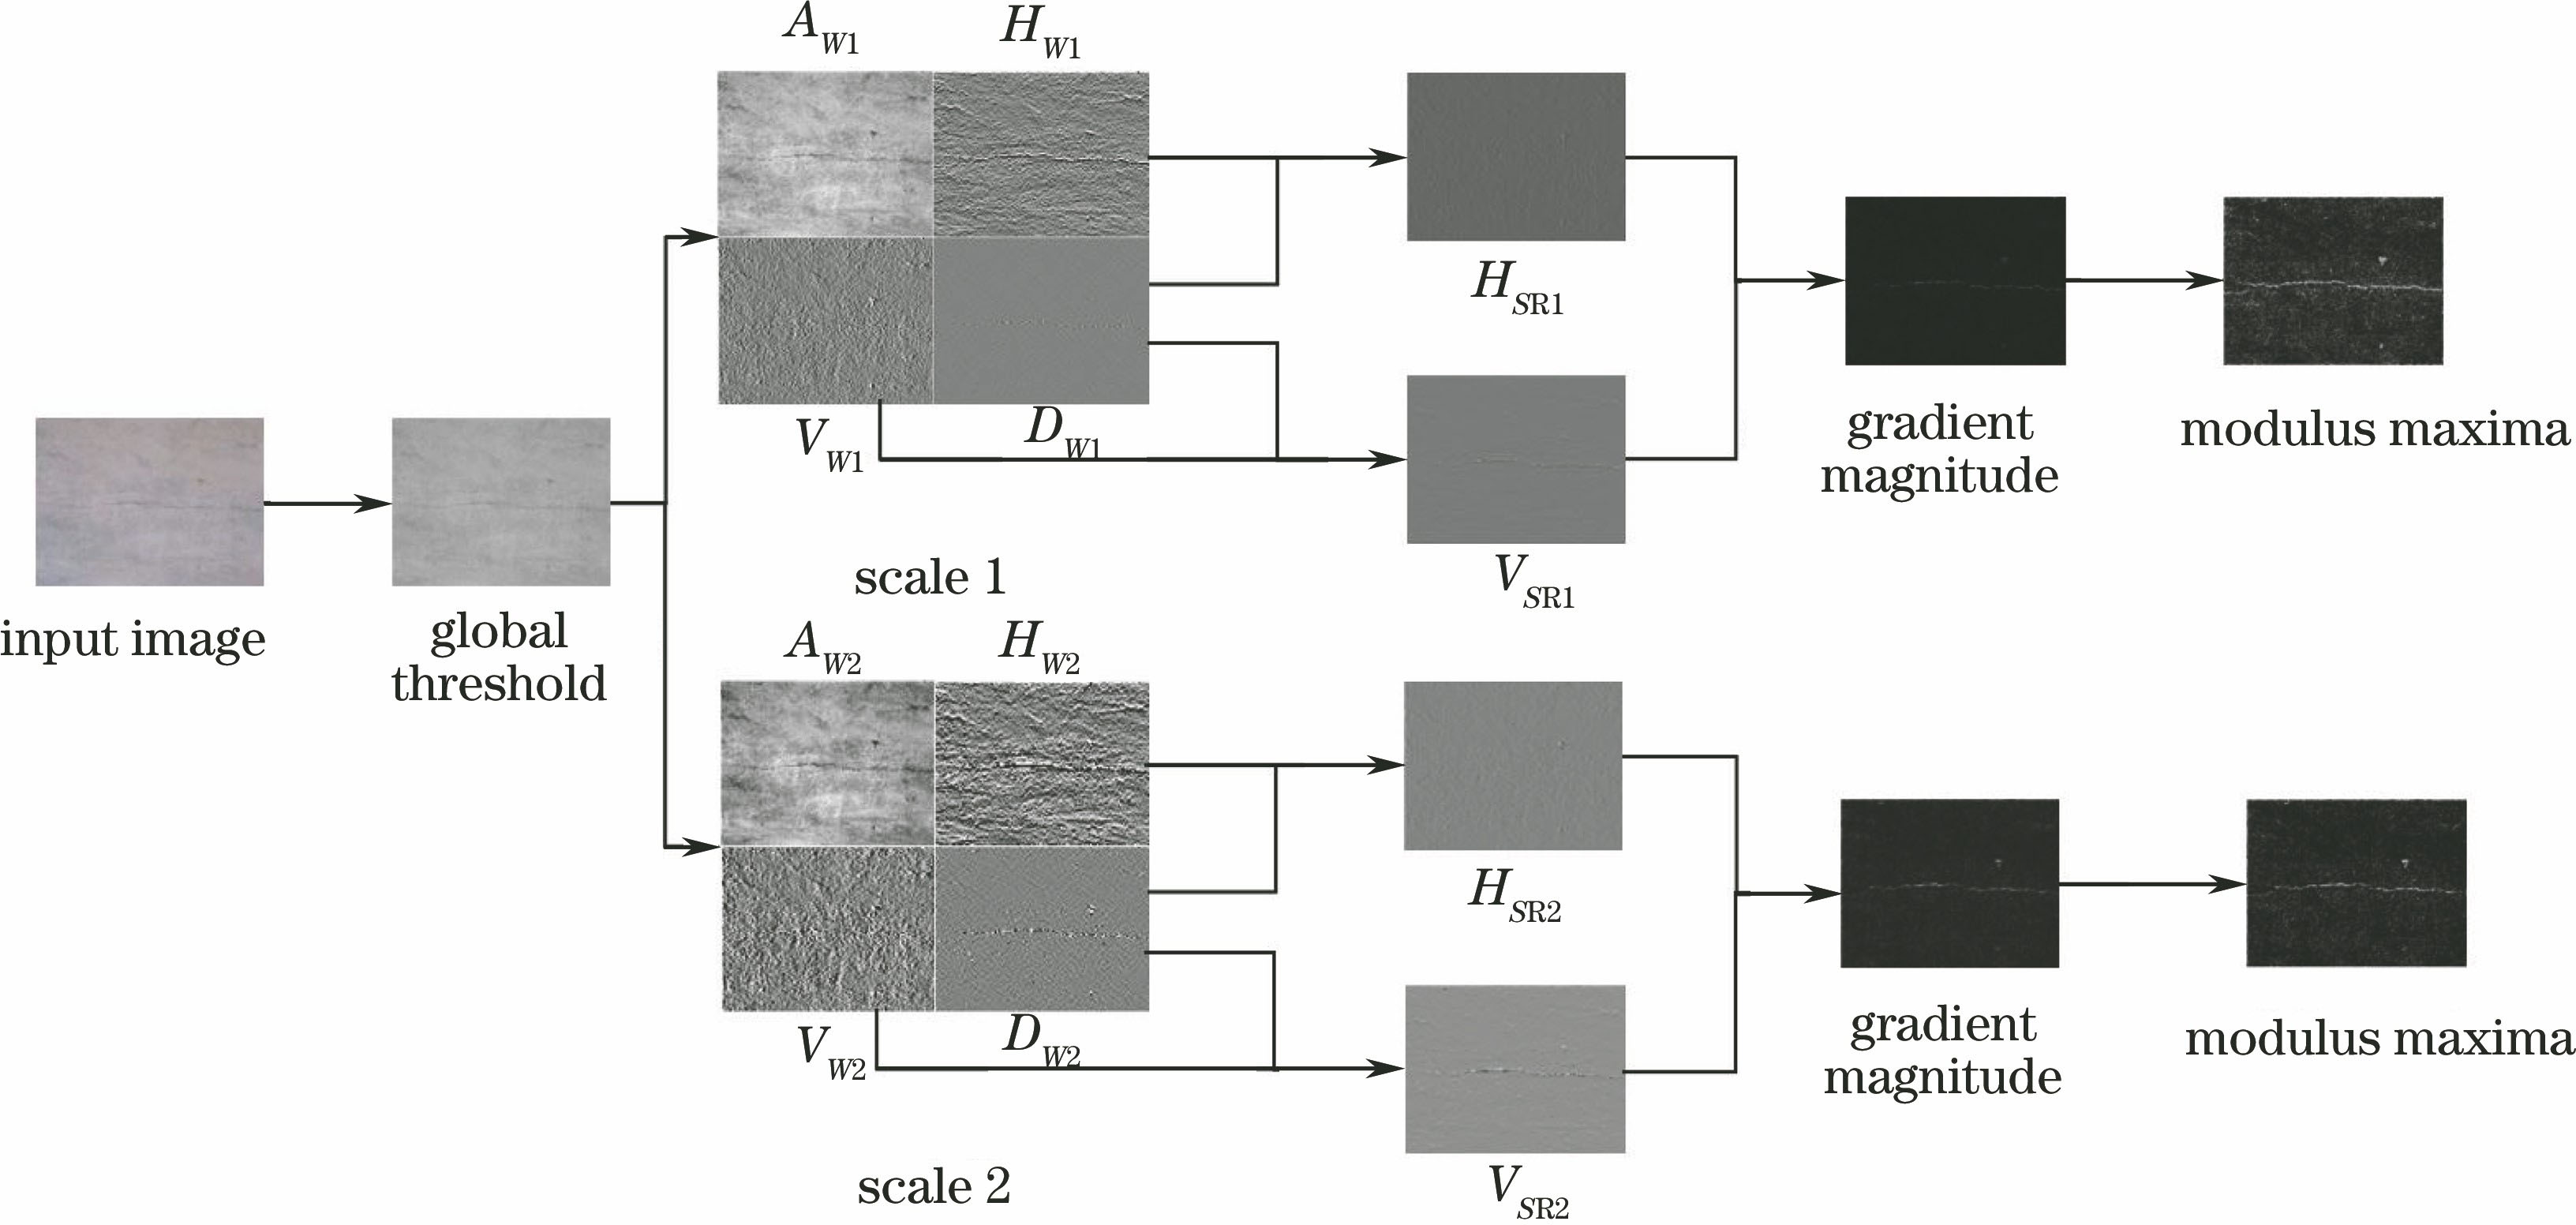 Flowchart of modulus maxima edge detection method with wavelet semi-reconfiguration